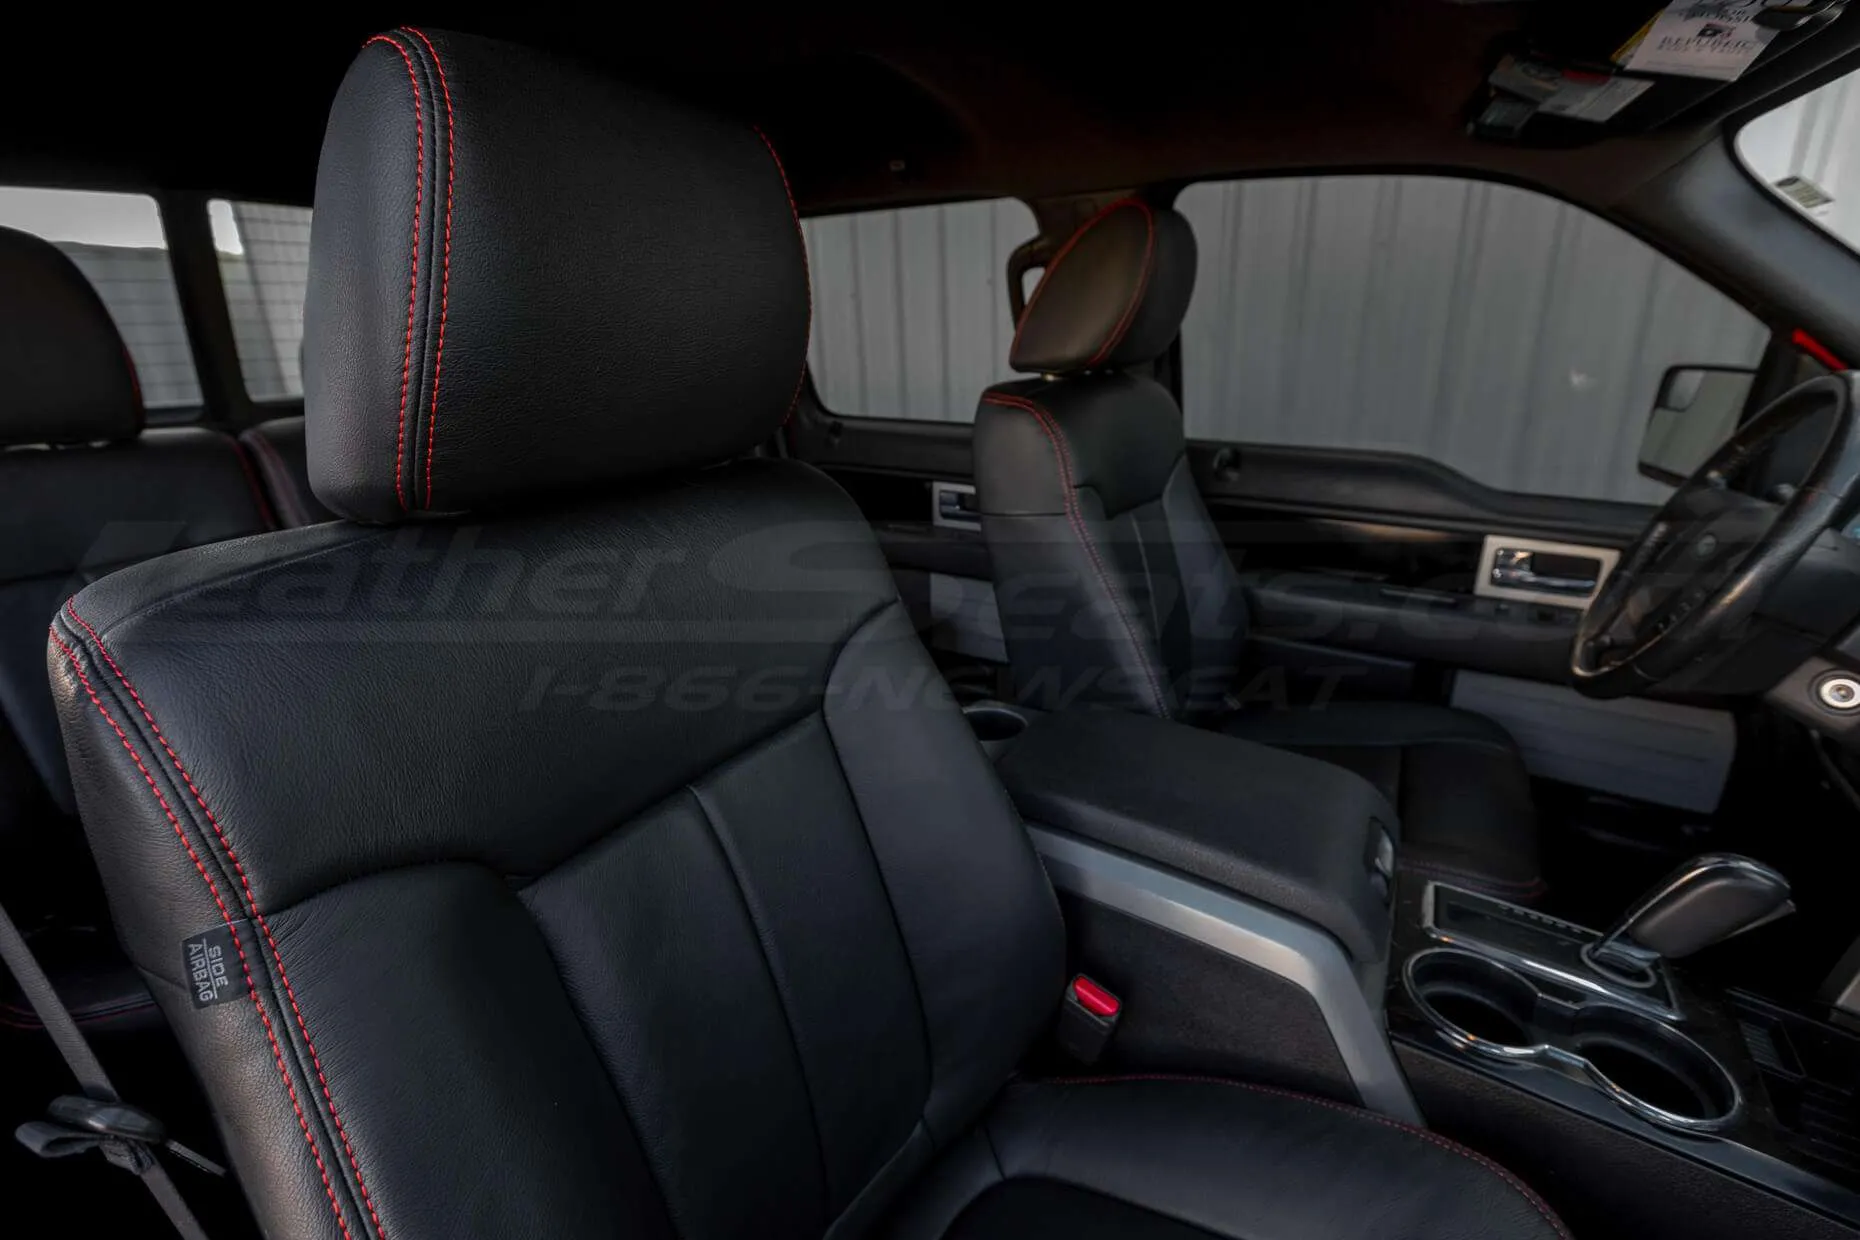 Ford F-150 Leather Seats - Black -Passenger seat stitching